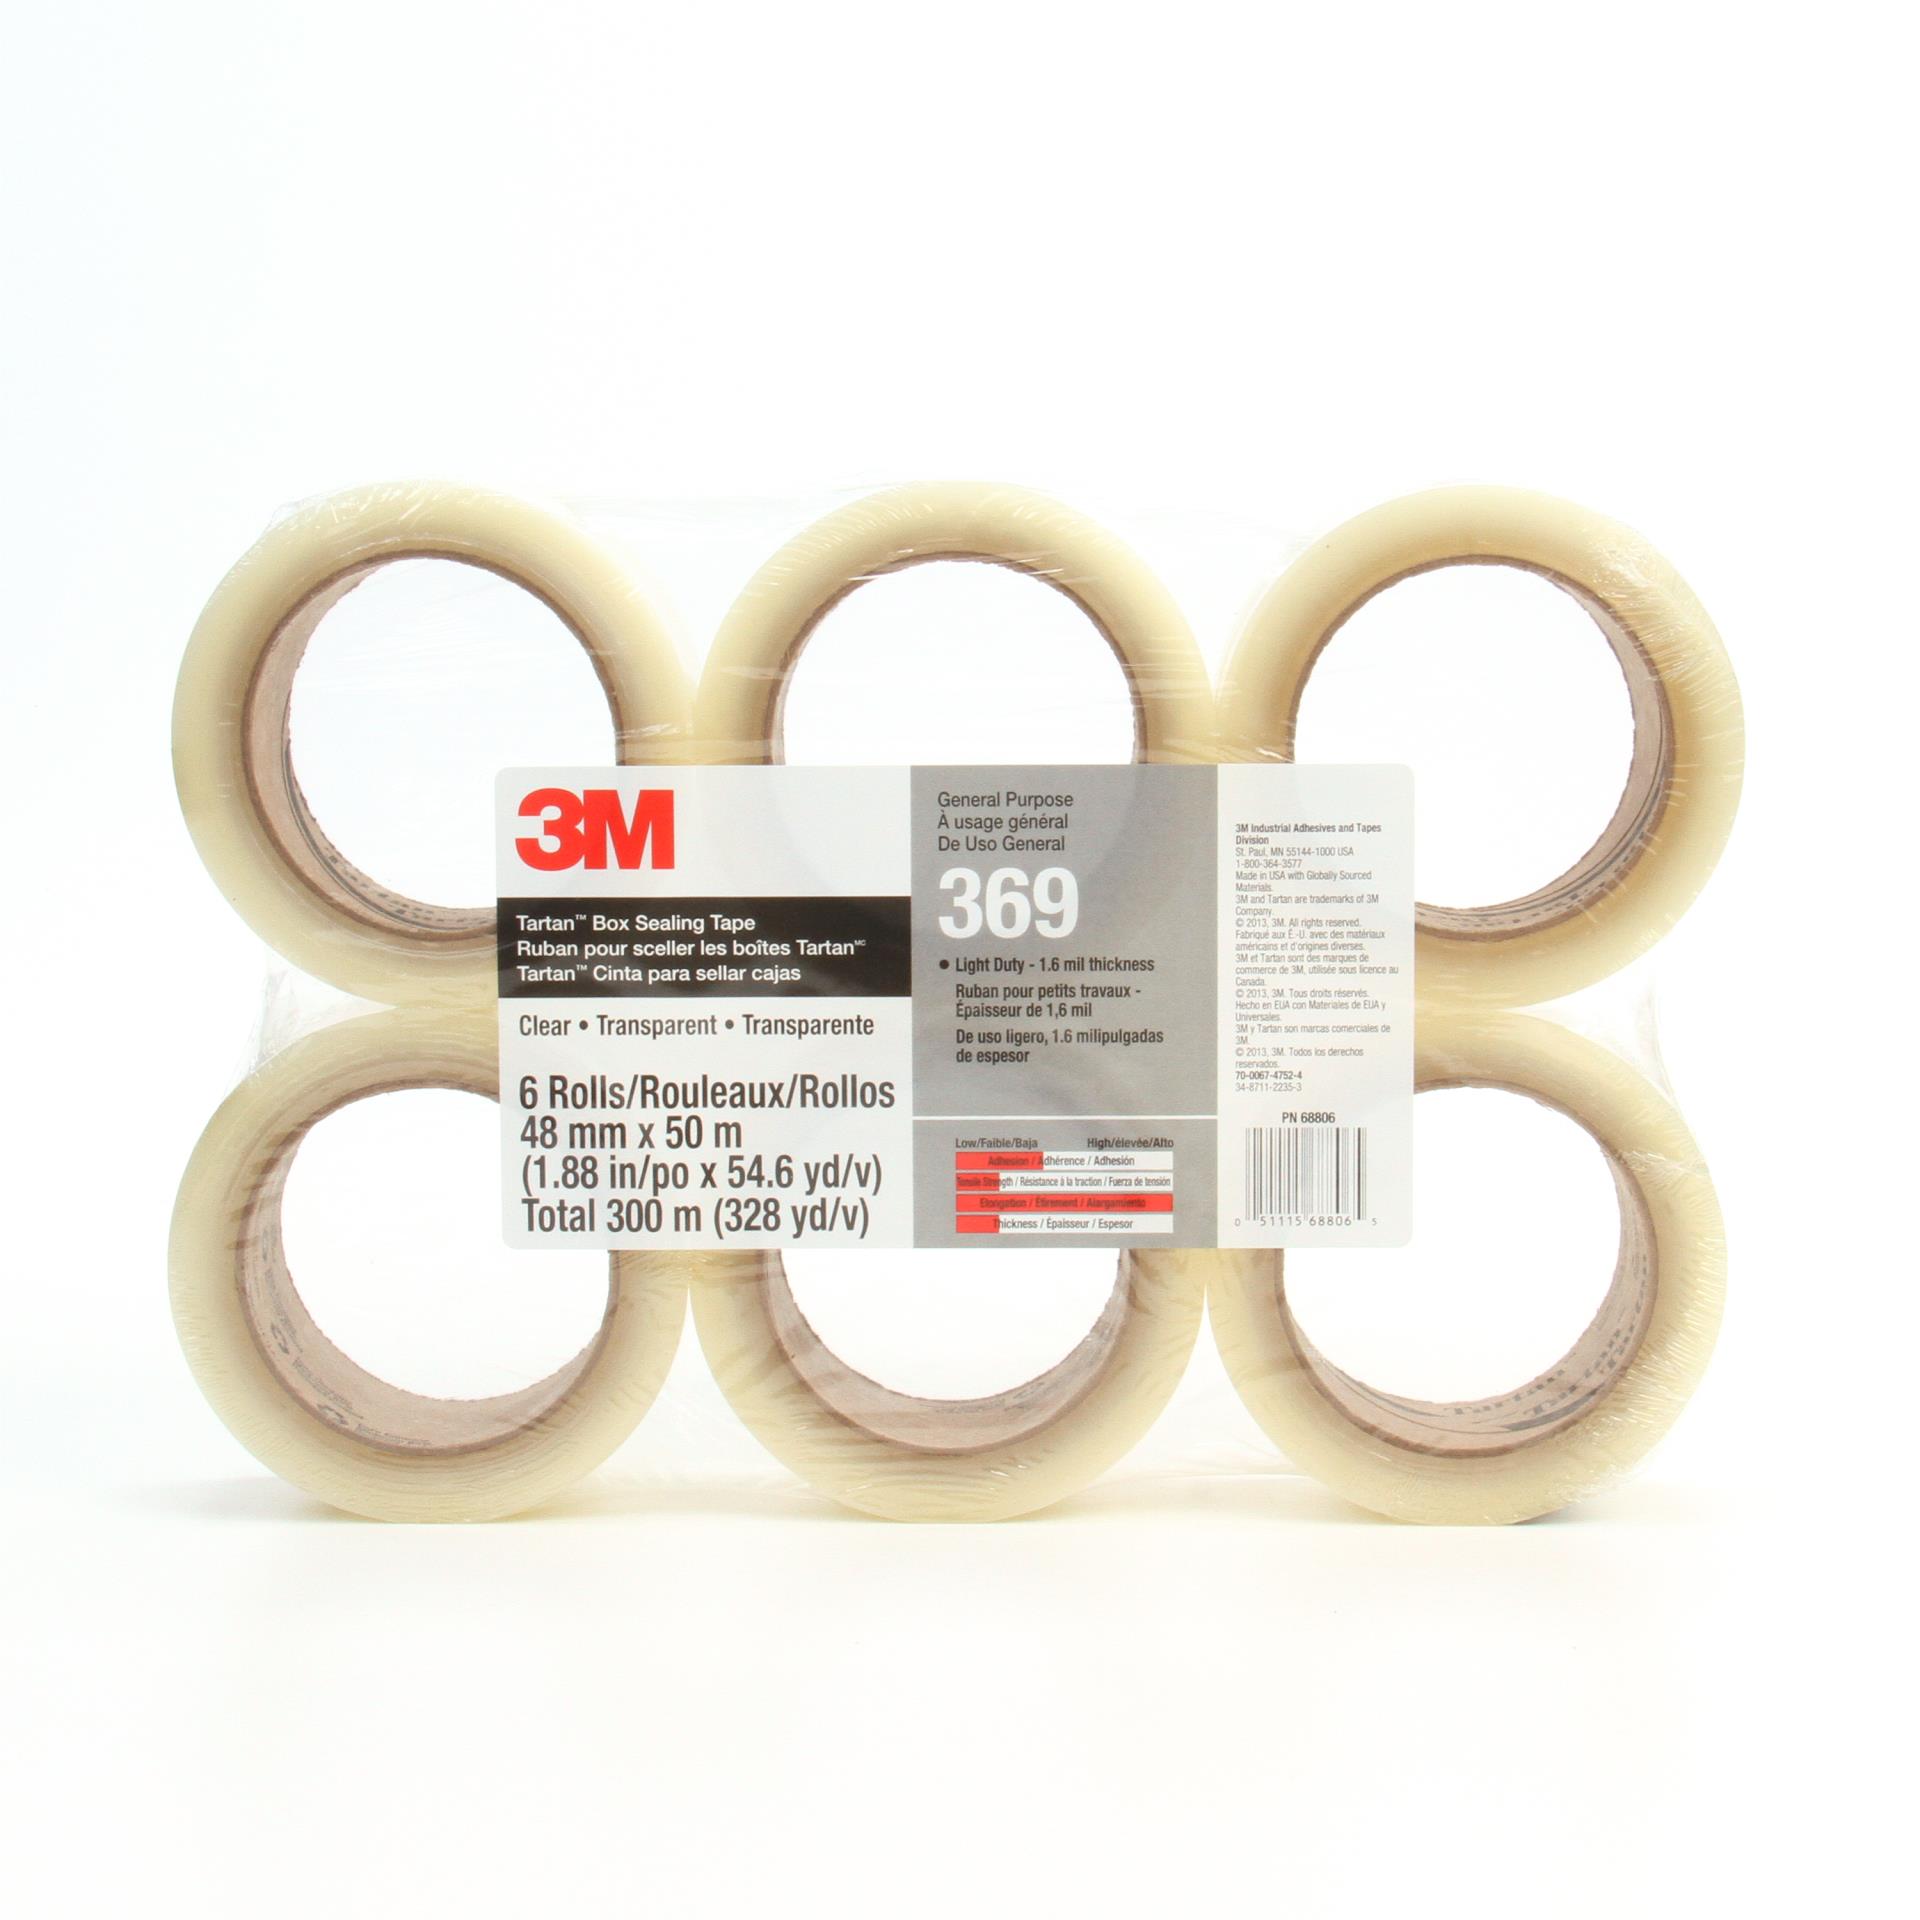 3M 600 CIRCLE-1.000-250 Scotch Premium Transparent Film Tape 1.000 Diameter Circle Pack of 250 3M 600 CIRCLE-1.000-250